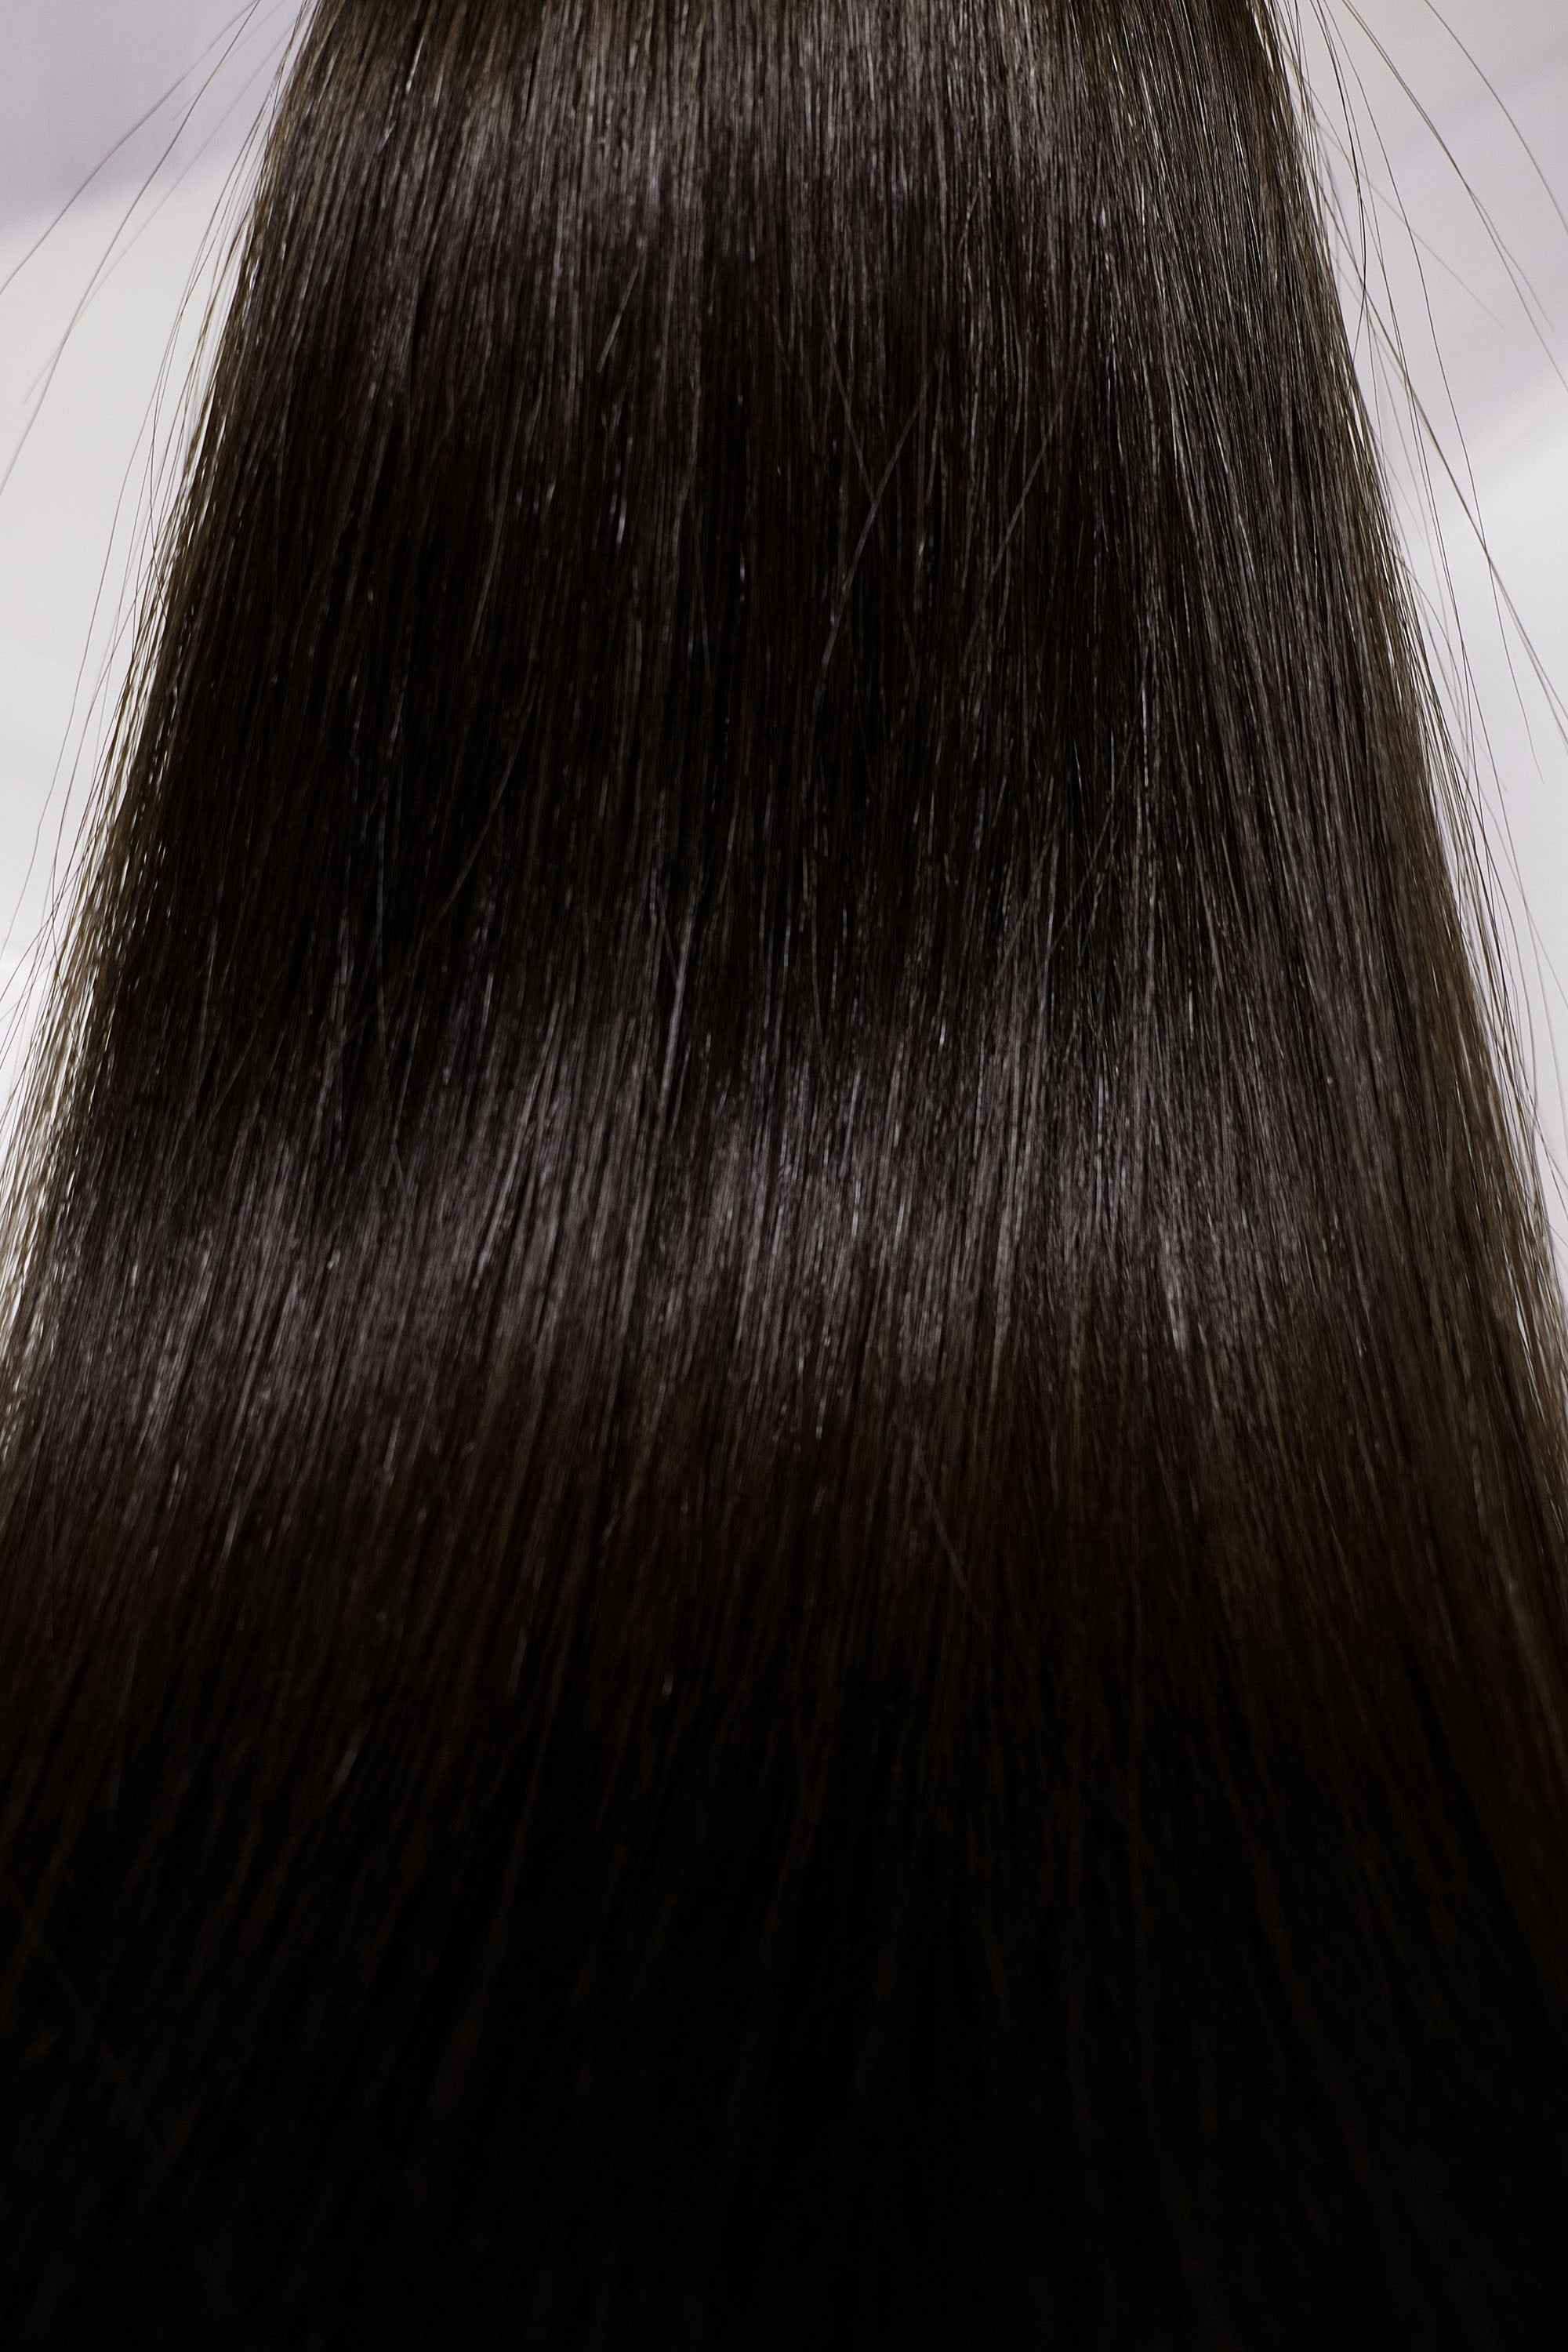 Behair professional Keratin Tip "Premium" 16" (40cm) Natural Straight Natural Black #1B - 25g (Micro - 0.5g each pcs) hair extensions